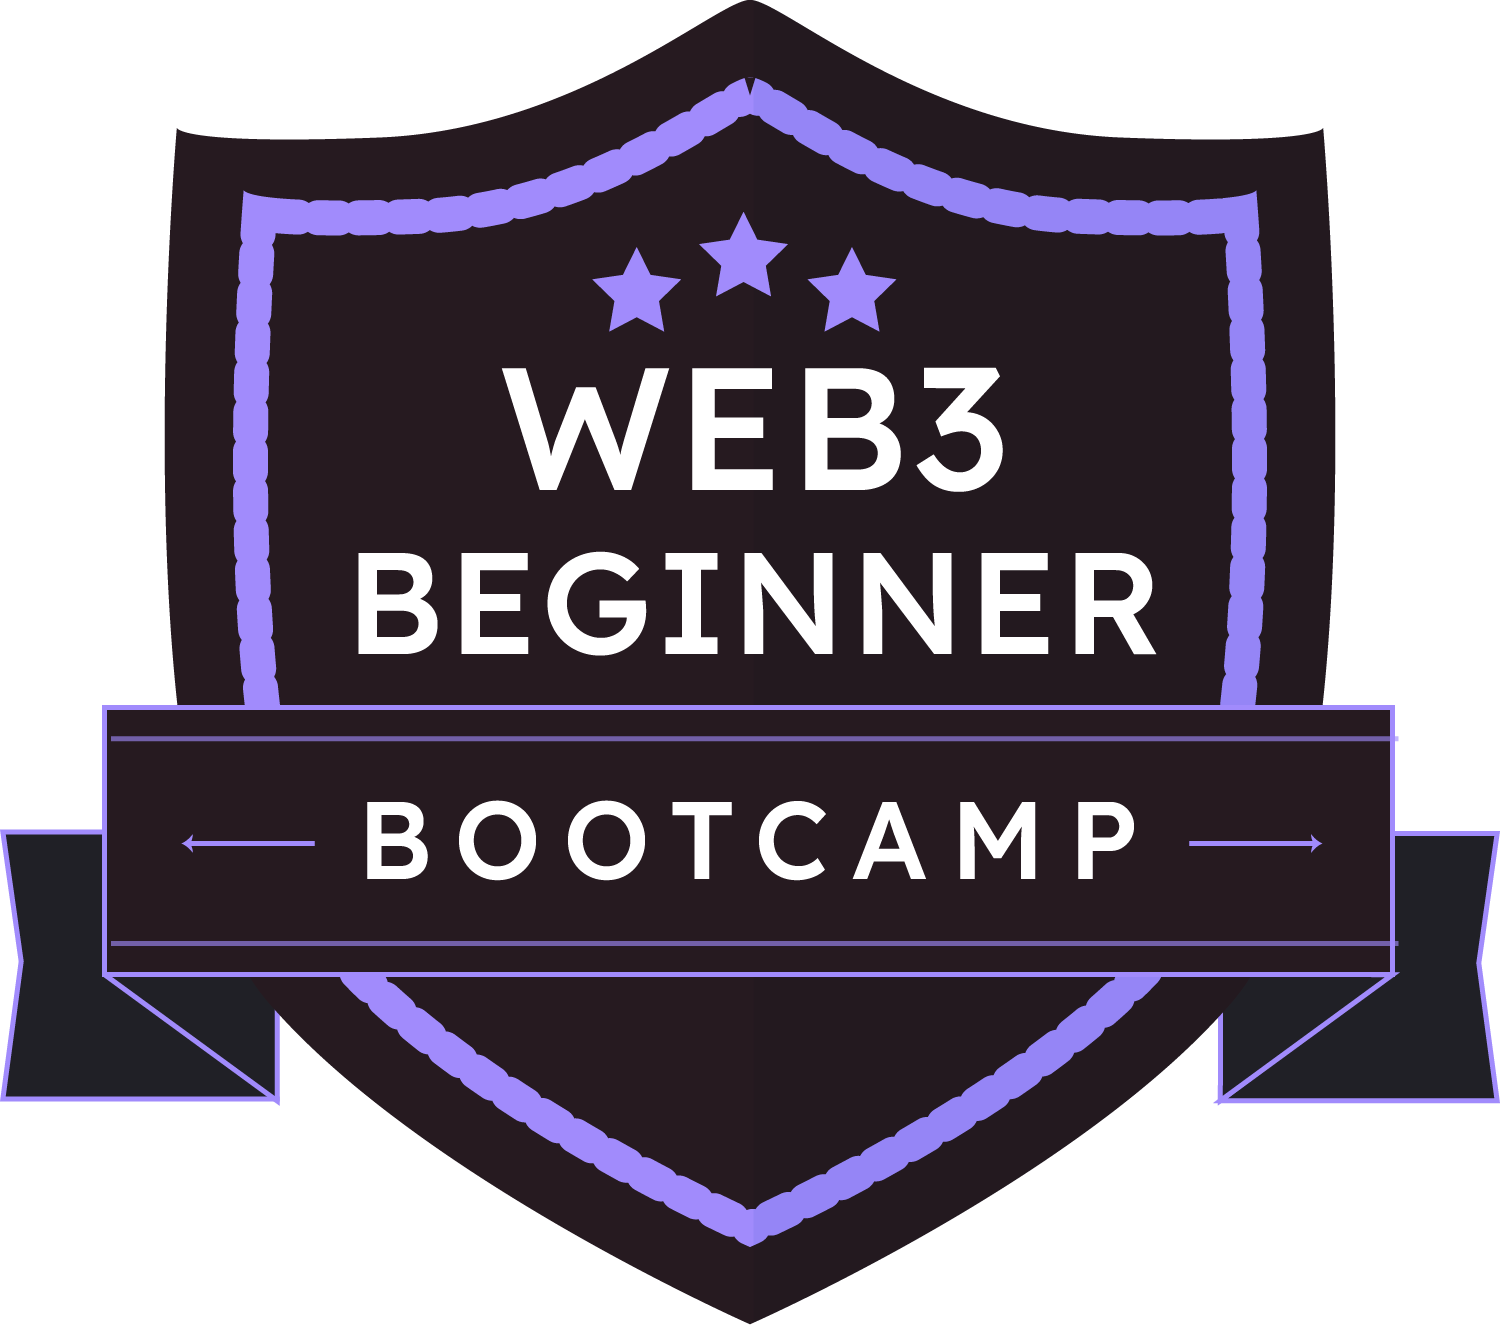 Web3 Beginner Bootcamp